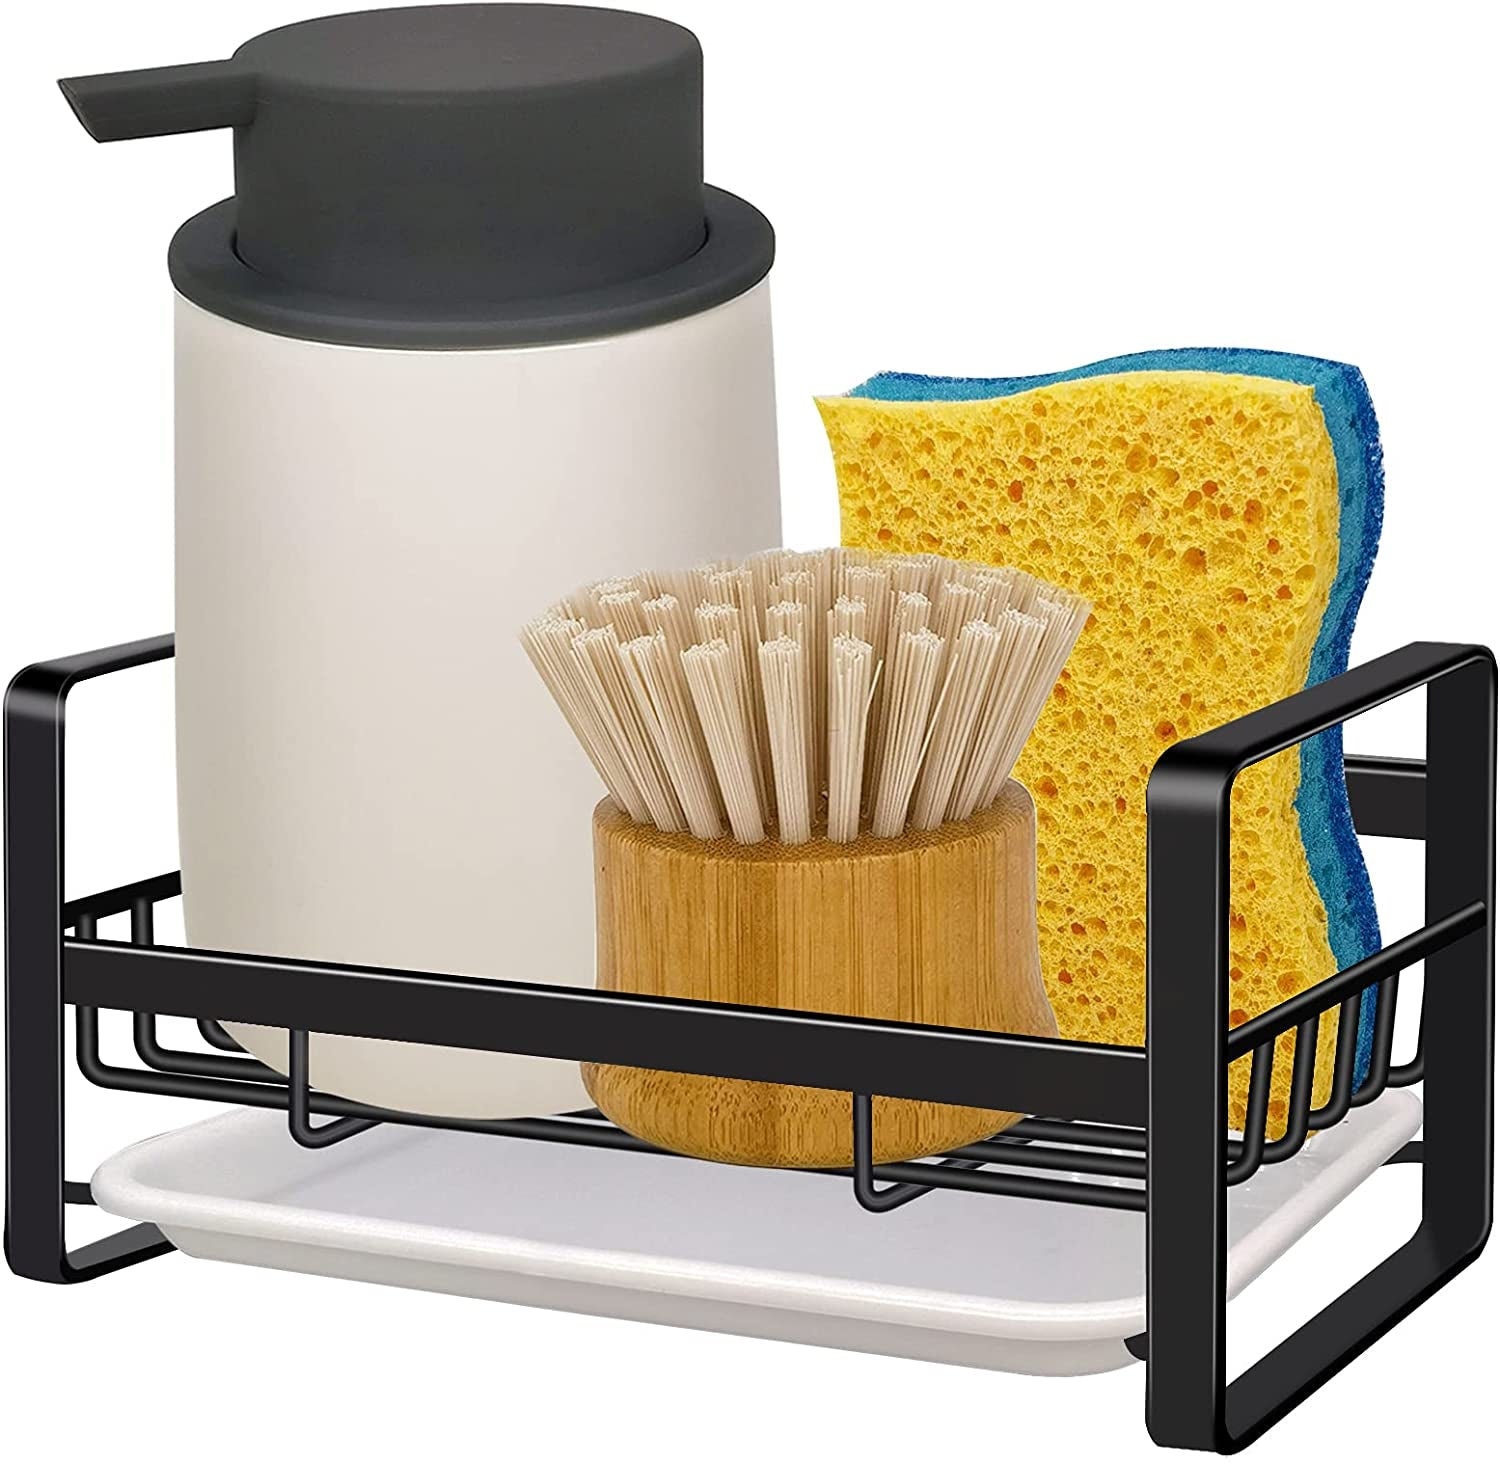 1pc Silicone Sponge Holder, Kitchen Sink Organizer Caddy, Storage Tray For  Dish Sponge, Soap Dispenser And Scrubber, Kitchen Accessories